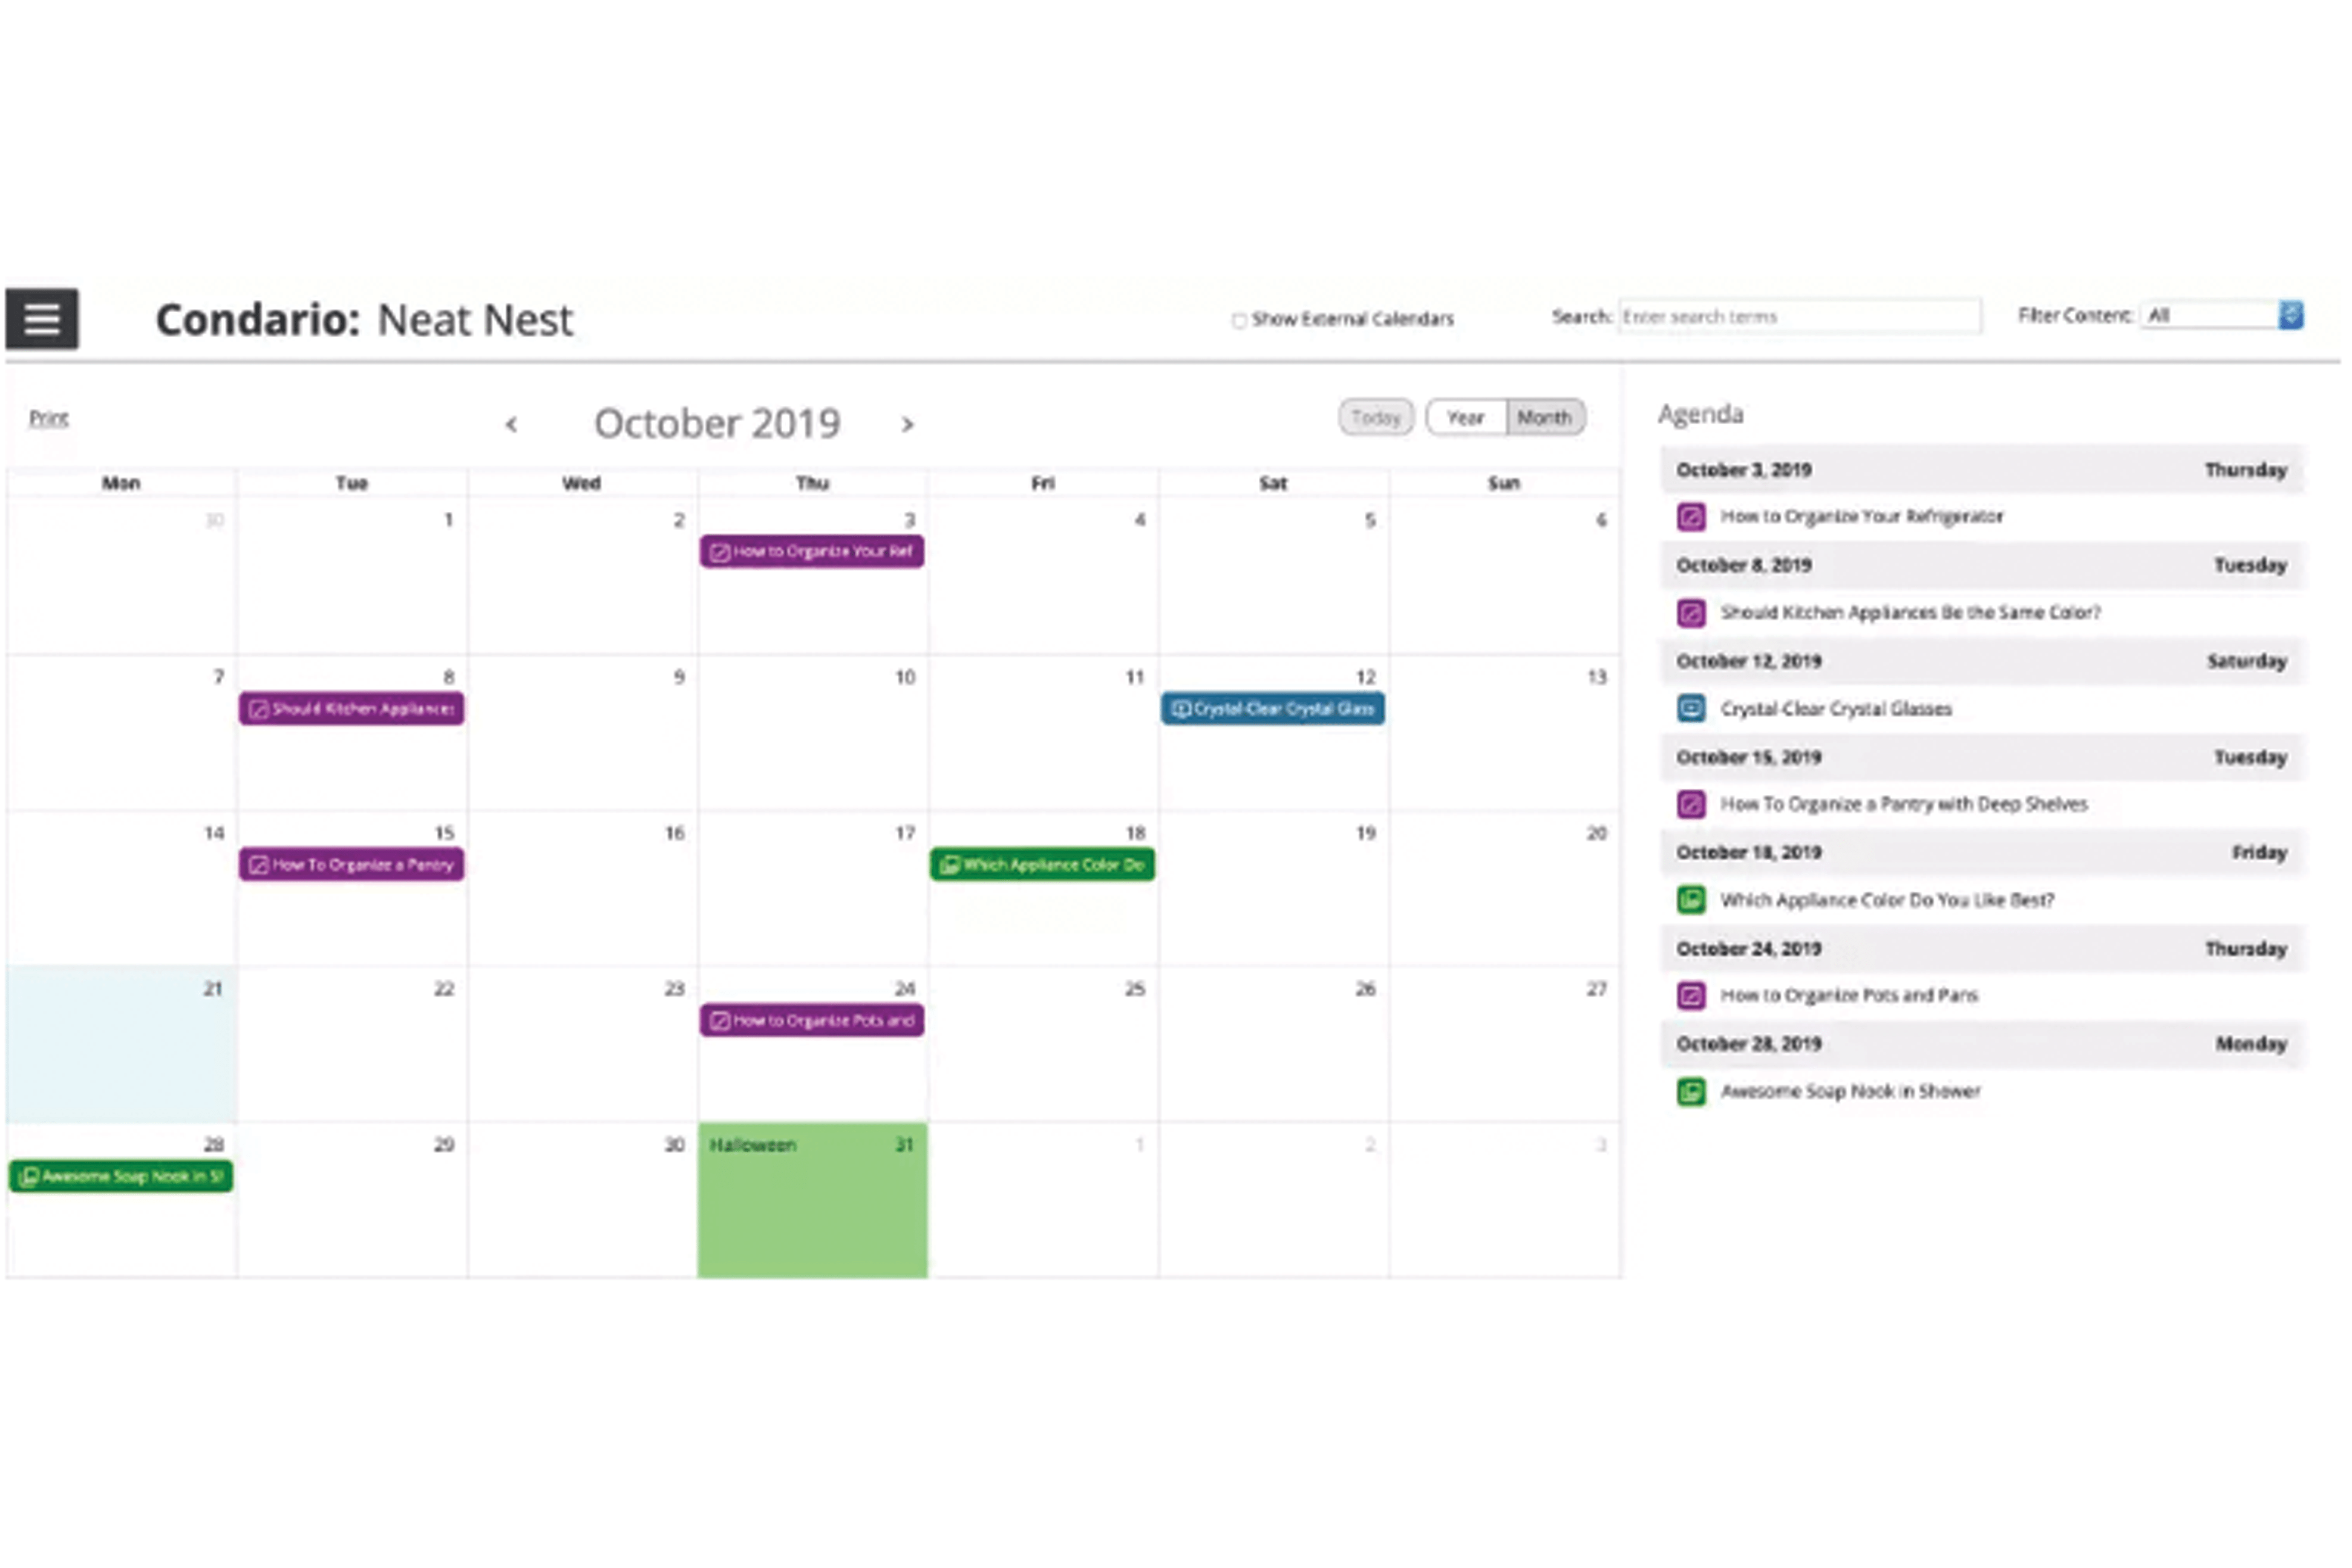 A view of the October 2019 Condario content calendar from Oneupweb.